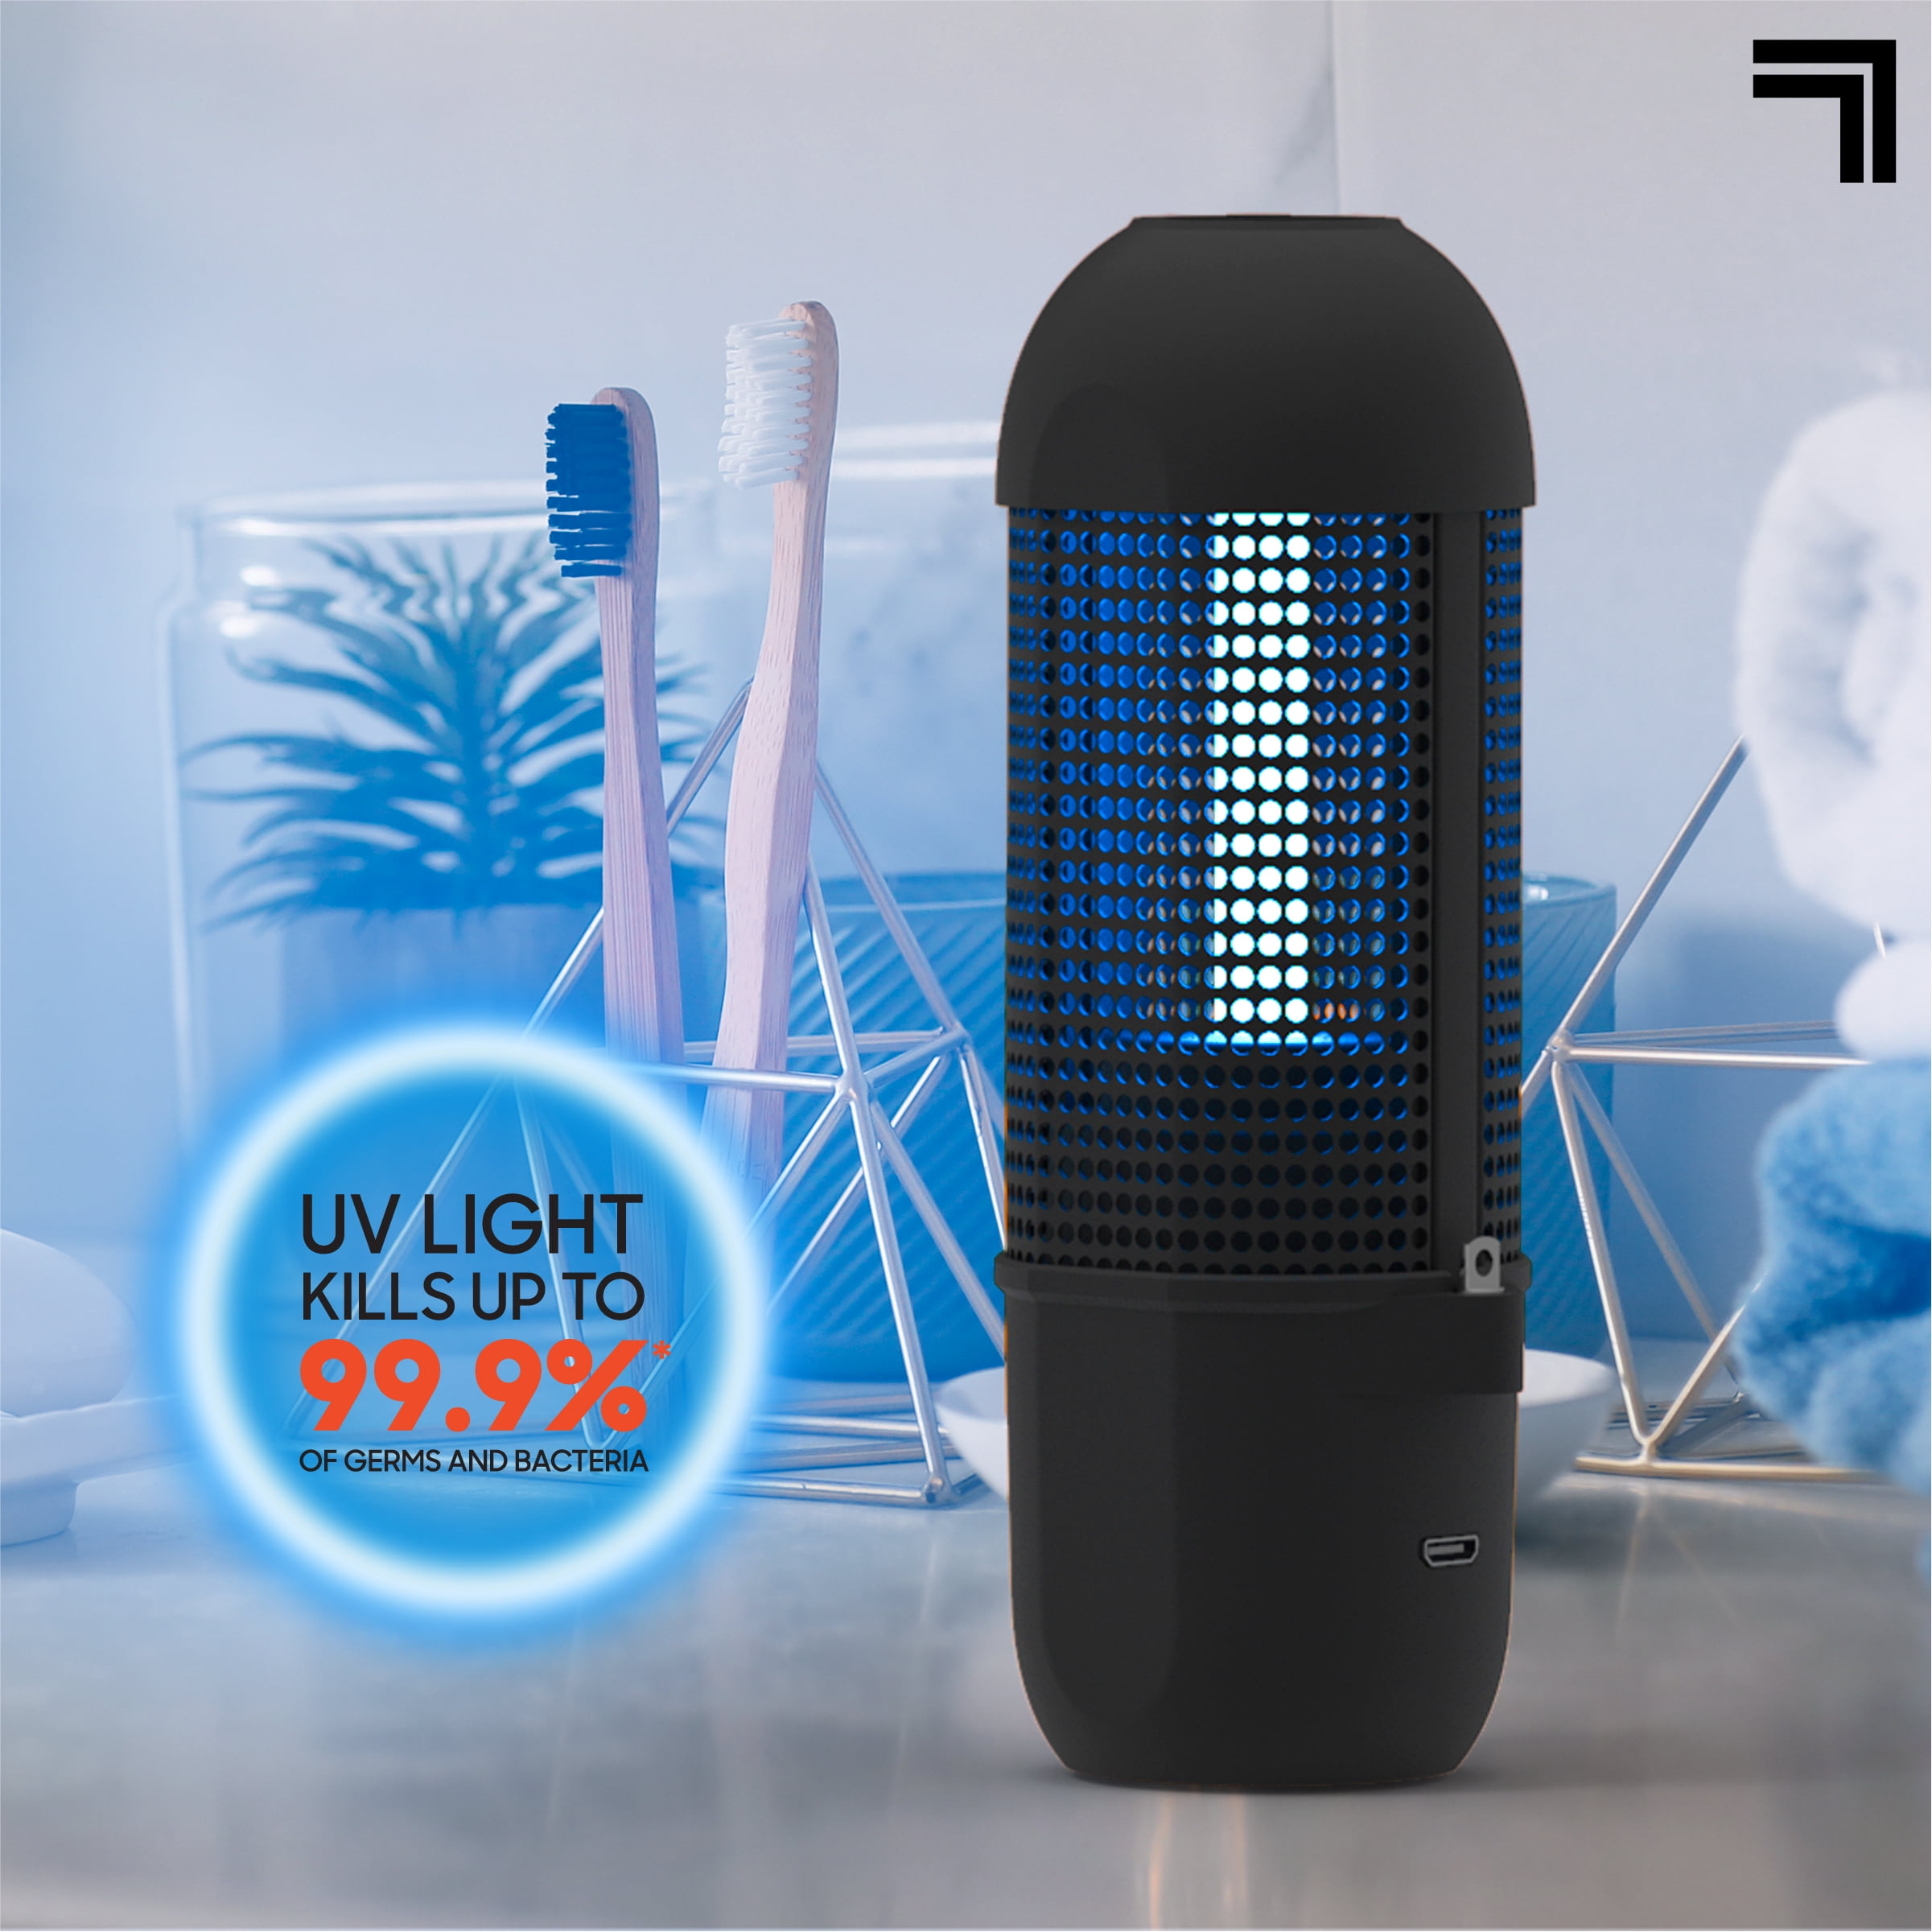 Sharper Image Rechargeable LED Lantern, Adult Unisex